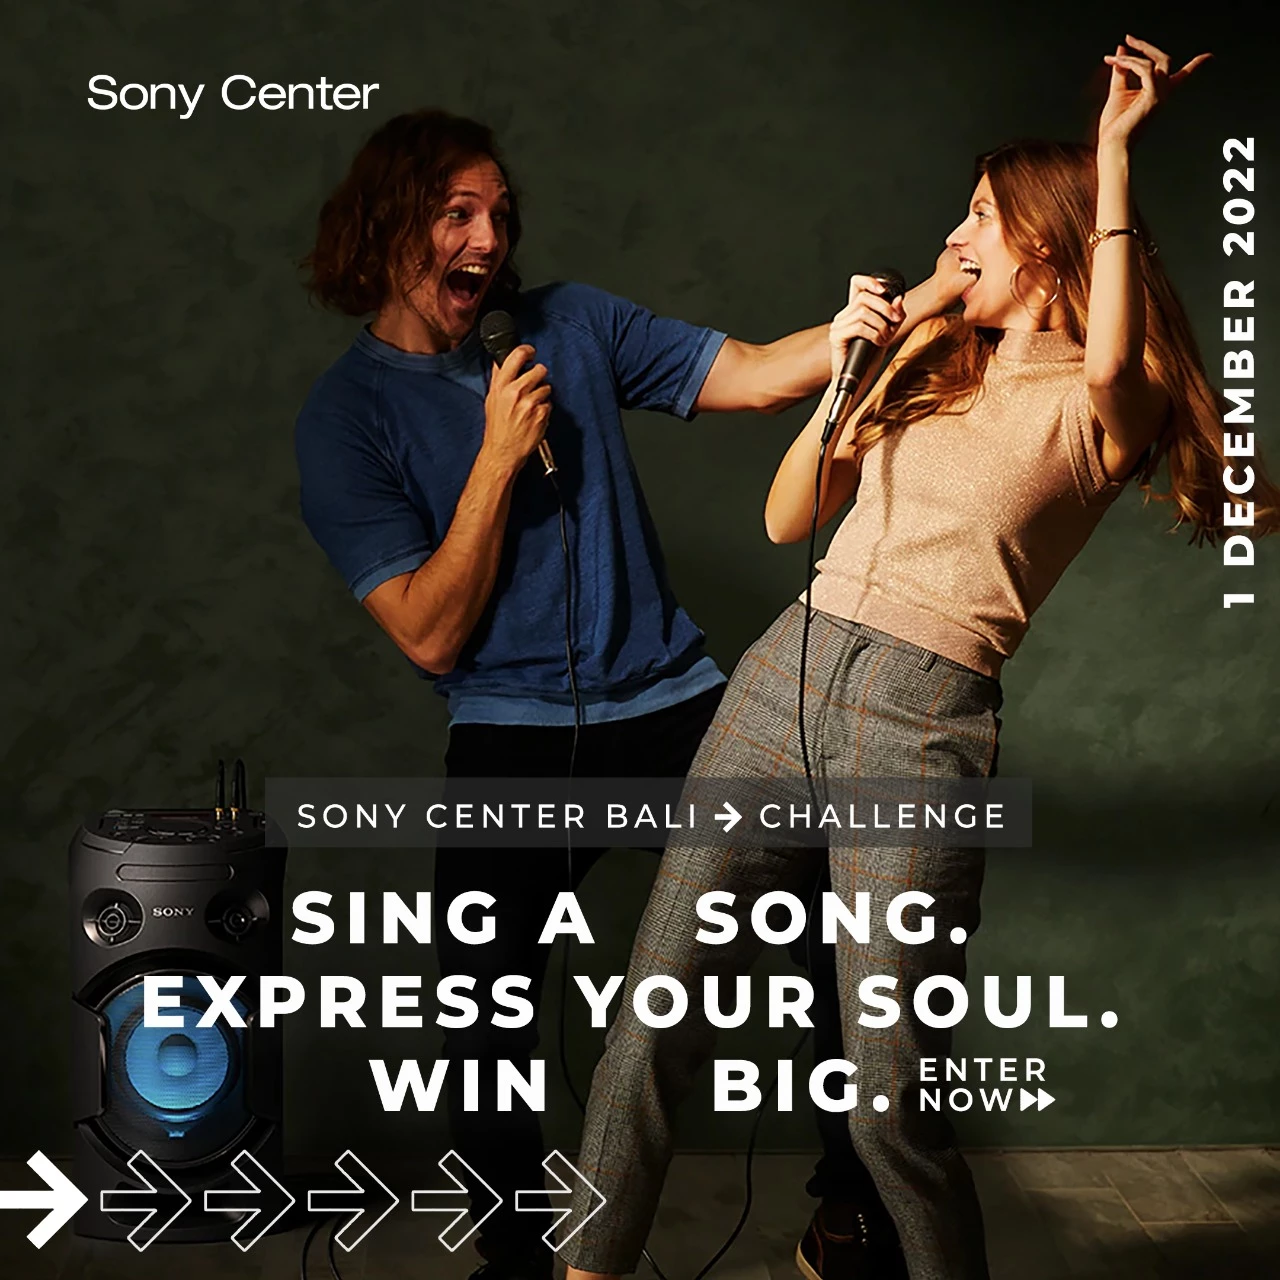 Hai Sahabat Sony Center, Beneran kamu jago nyanyi? kalau kamu merasa jago bernyanyi, Yuk ikutan Lomba Dance di Sony Center Bali Challenge. Event ini diselenggarakan spesial untuk menyambut Grand Opening Sony Center Bali.